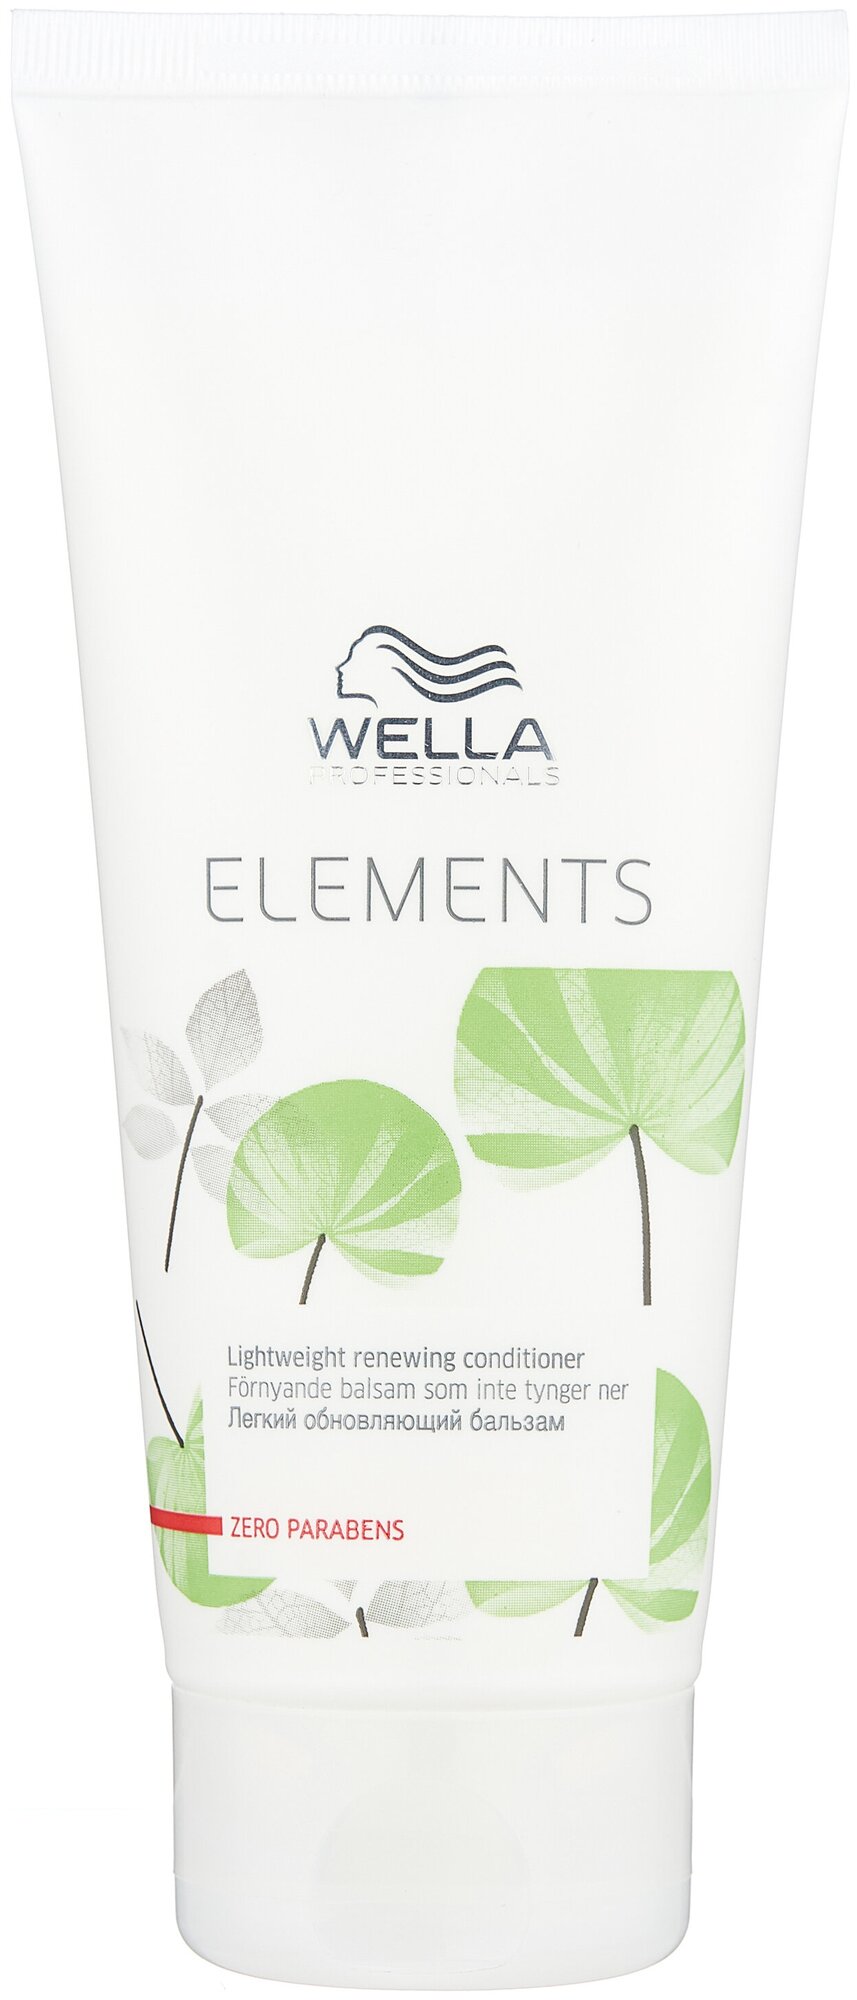 Wella Professionals кондиционер Elements Renewing для сухих волос, 200 мл